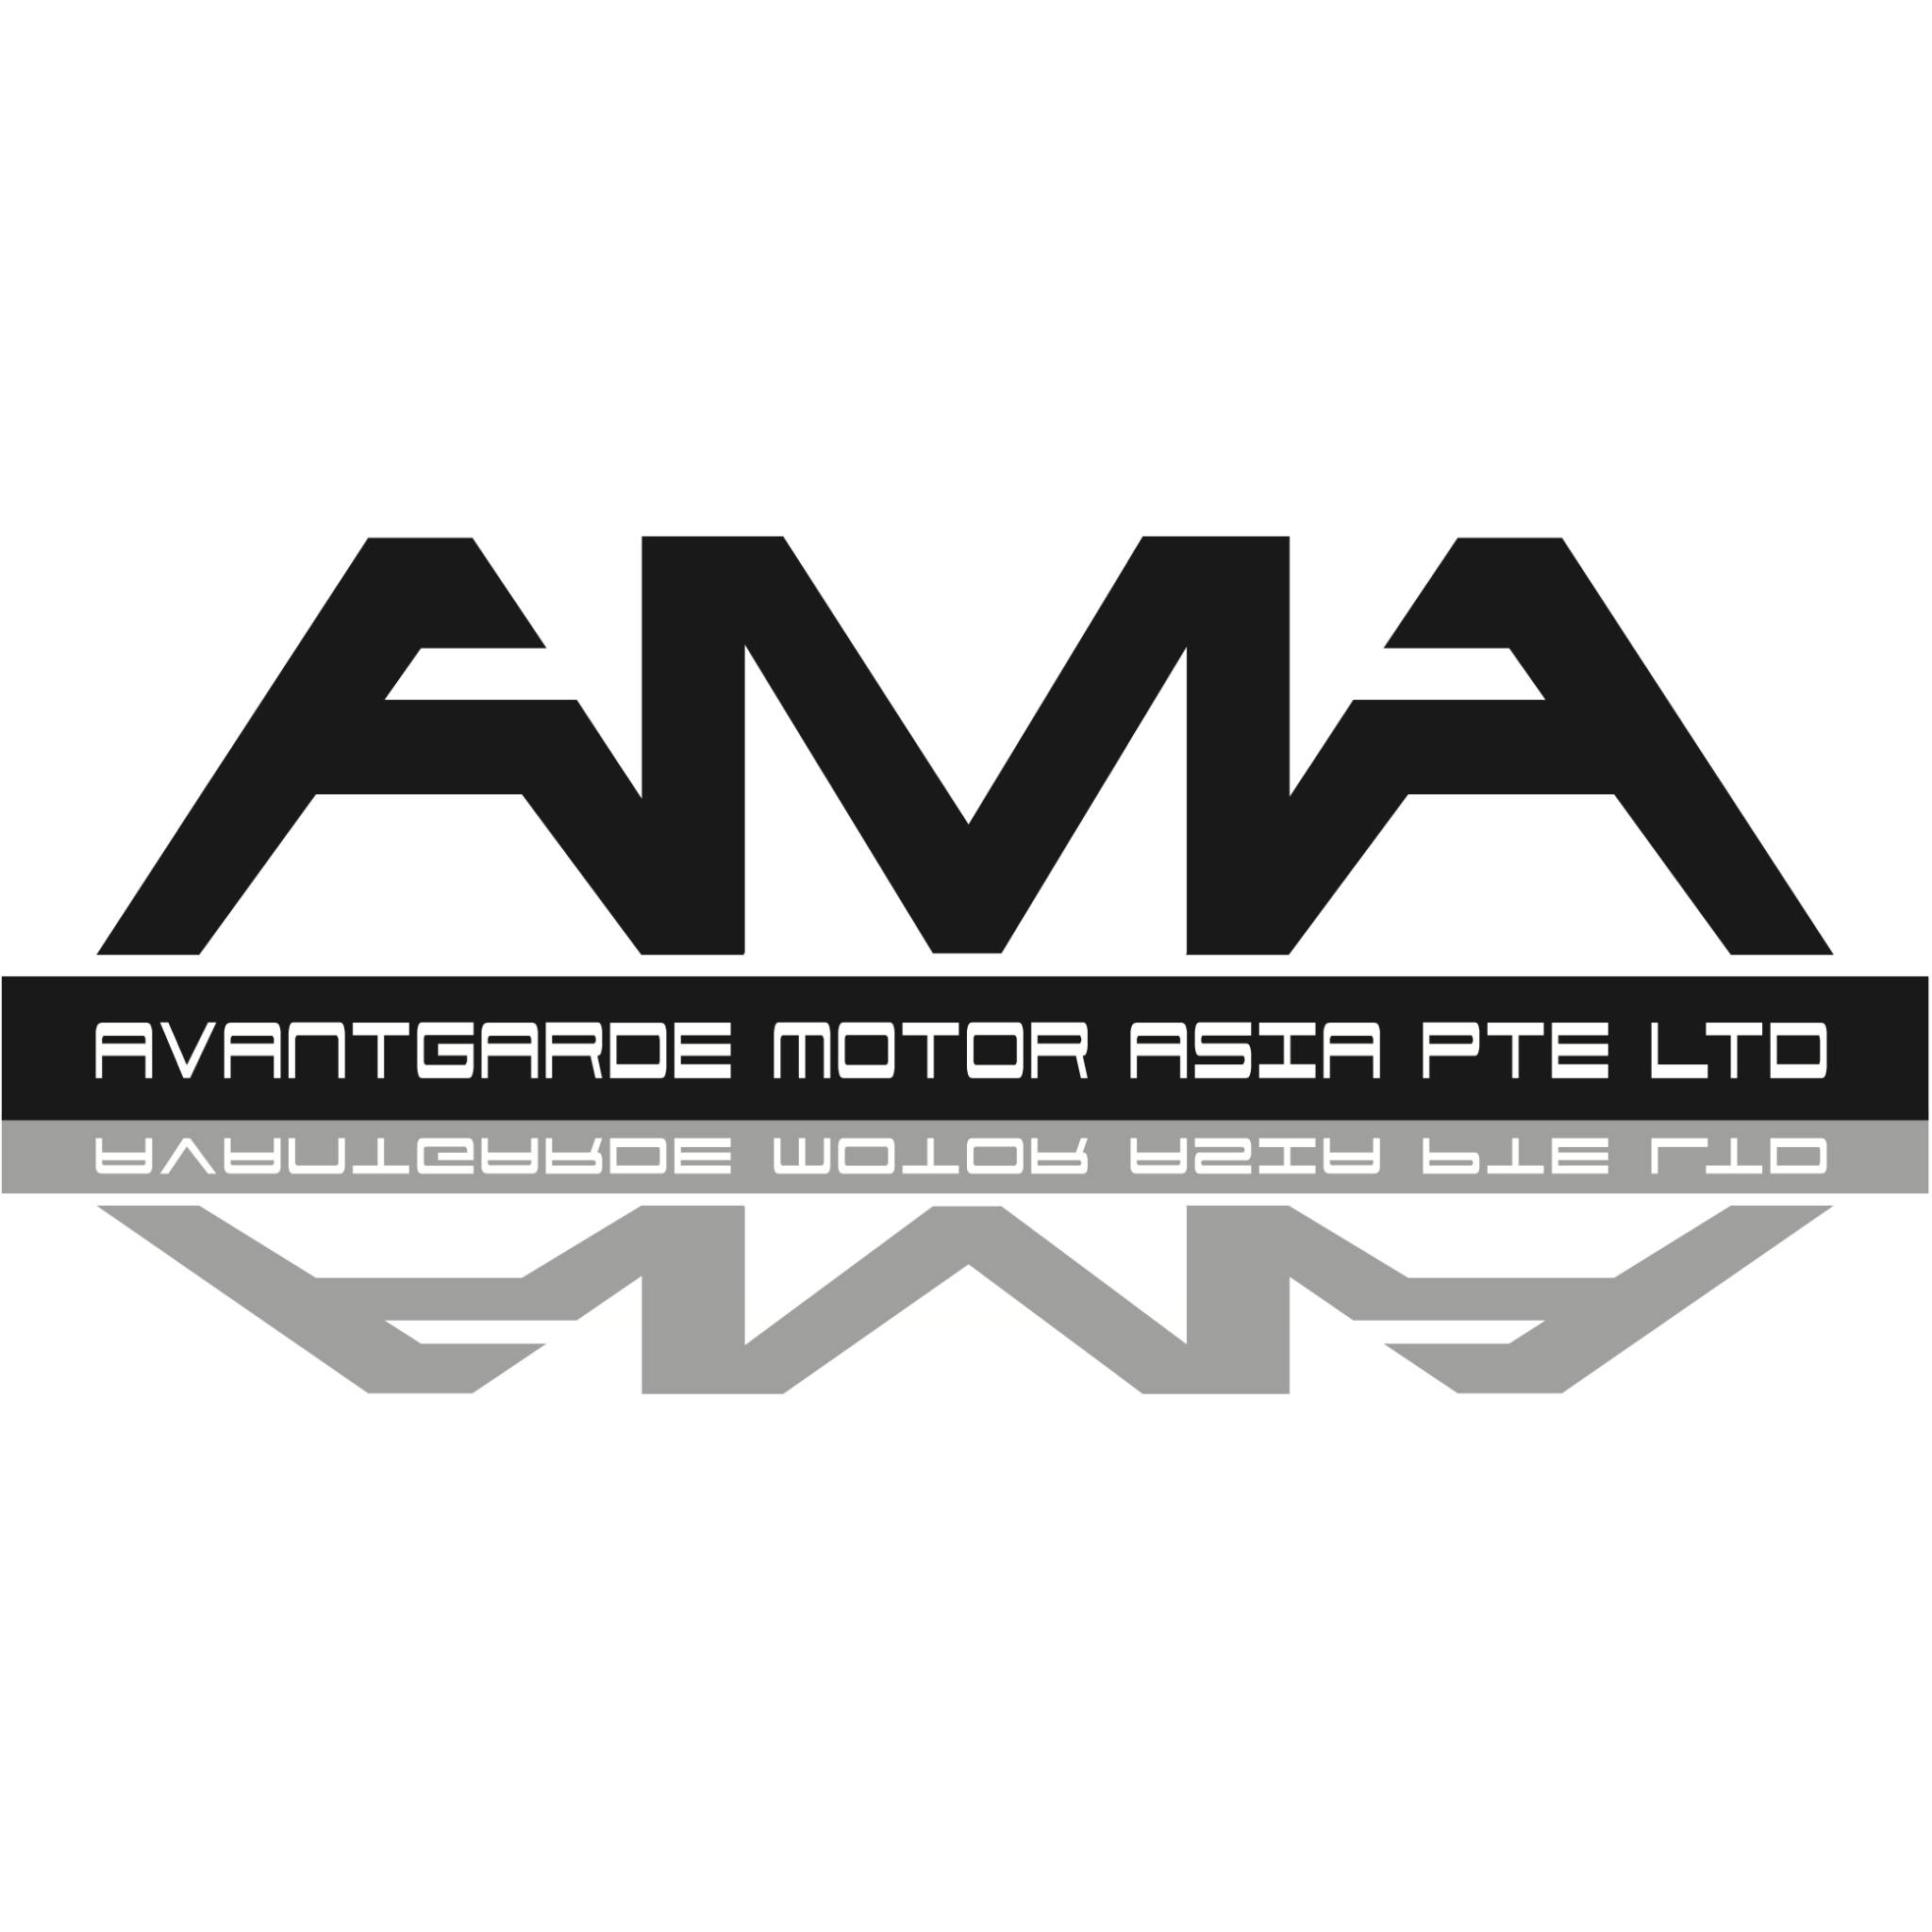 Avantgarde Motor Asia Pte Ltd